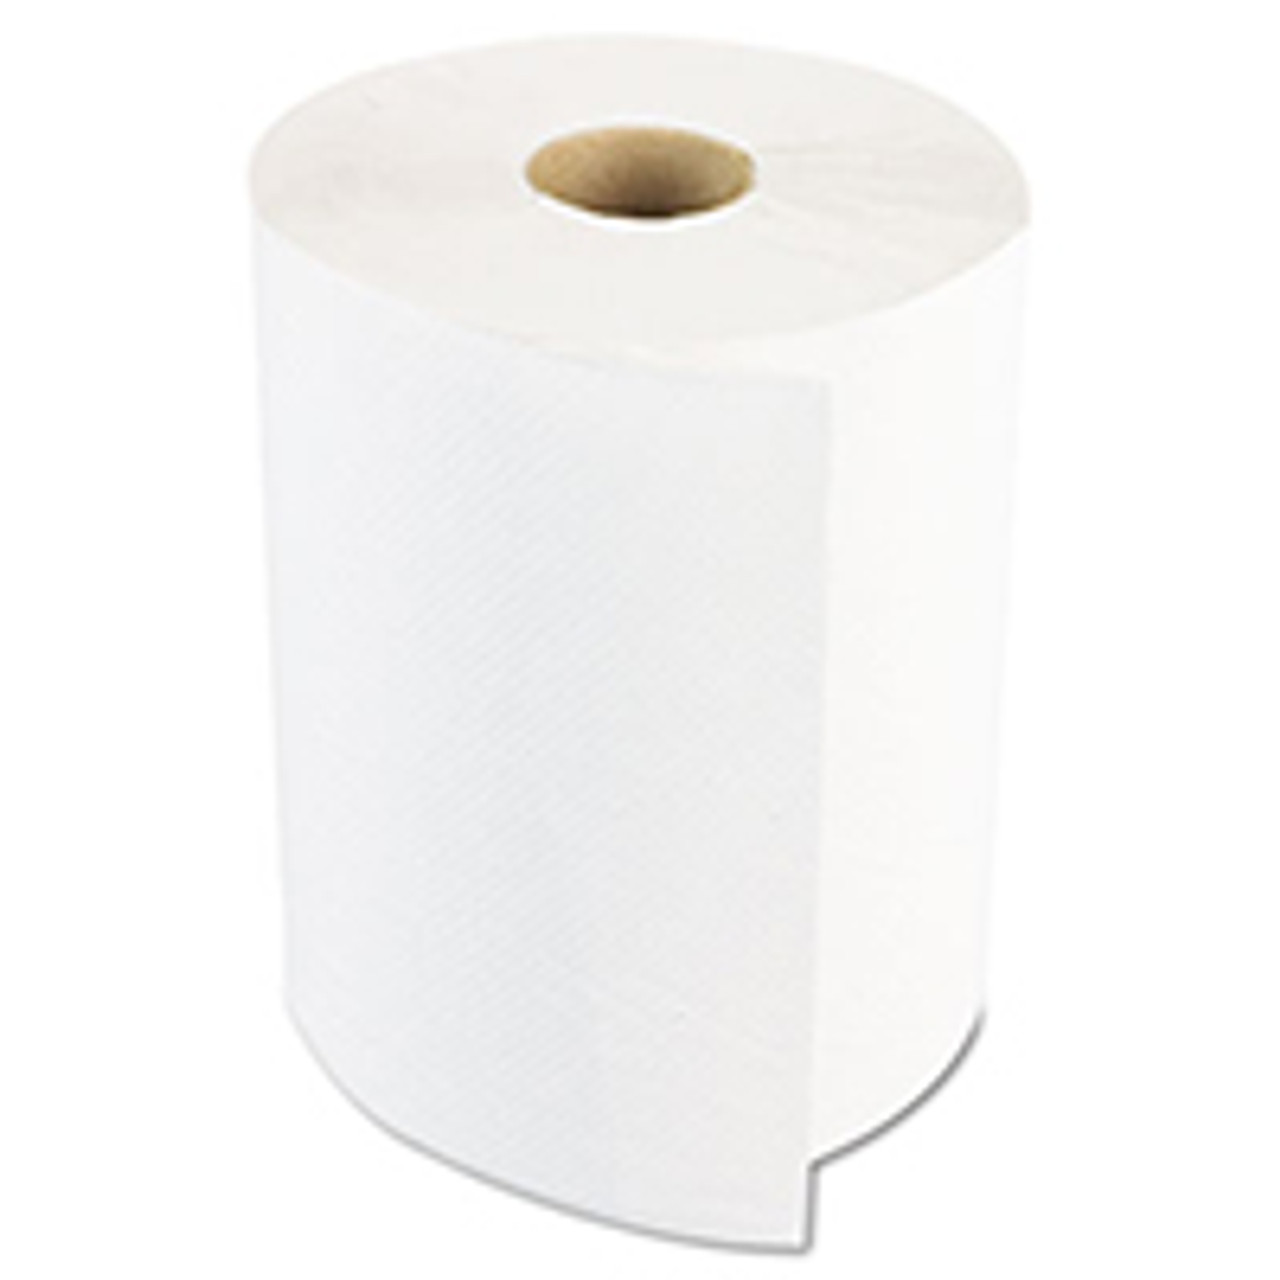 Everwipe Roll Paper Towel 10 IN White Standard Roll 6 Rolls/Case